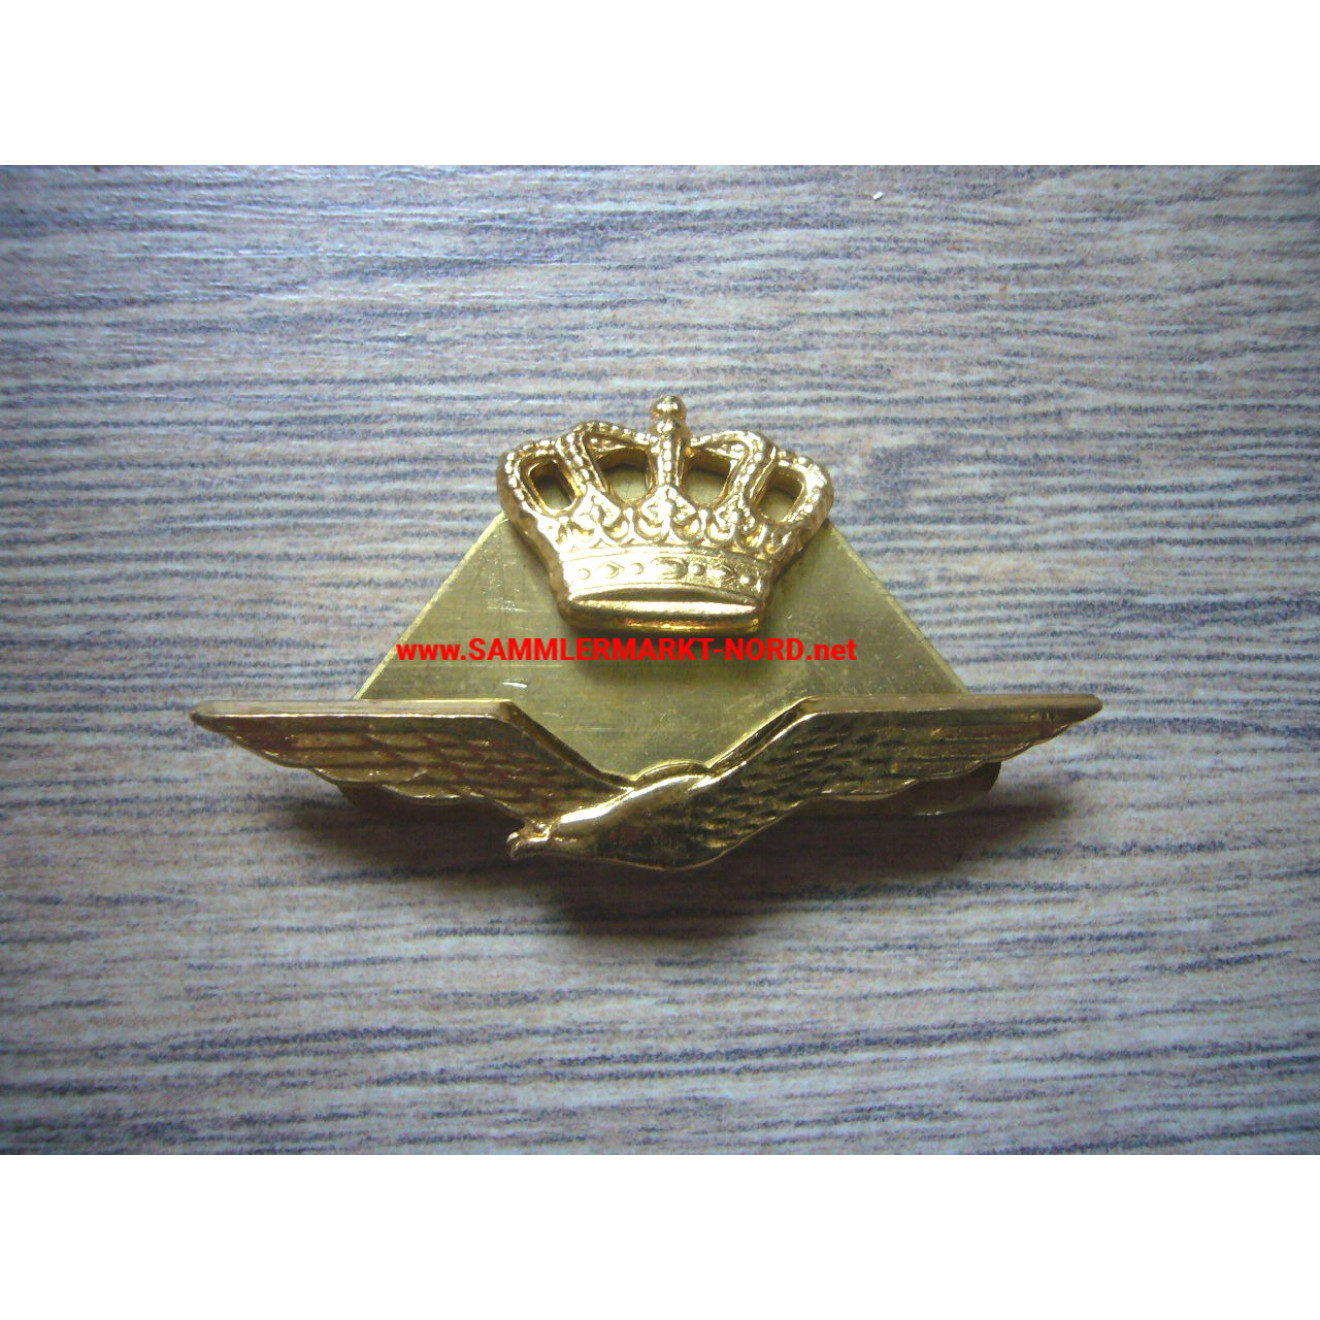 Netherlands - Royal Air Force - Pilot's Badge